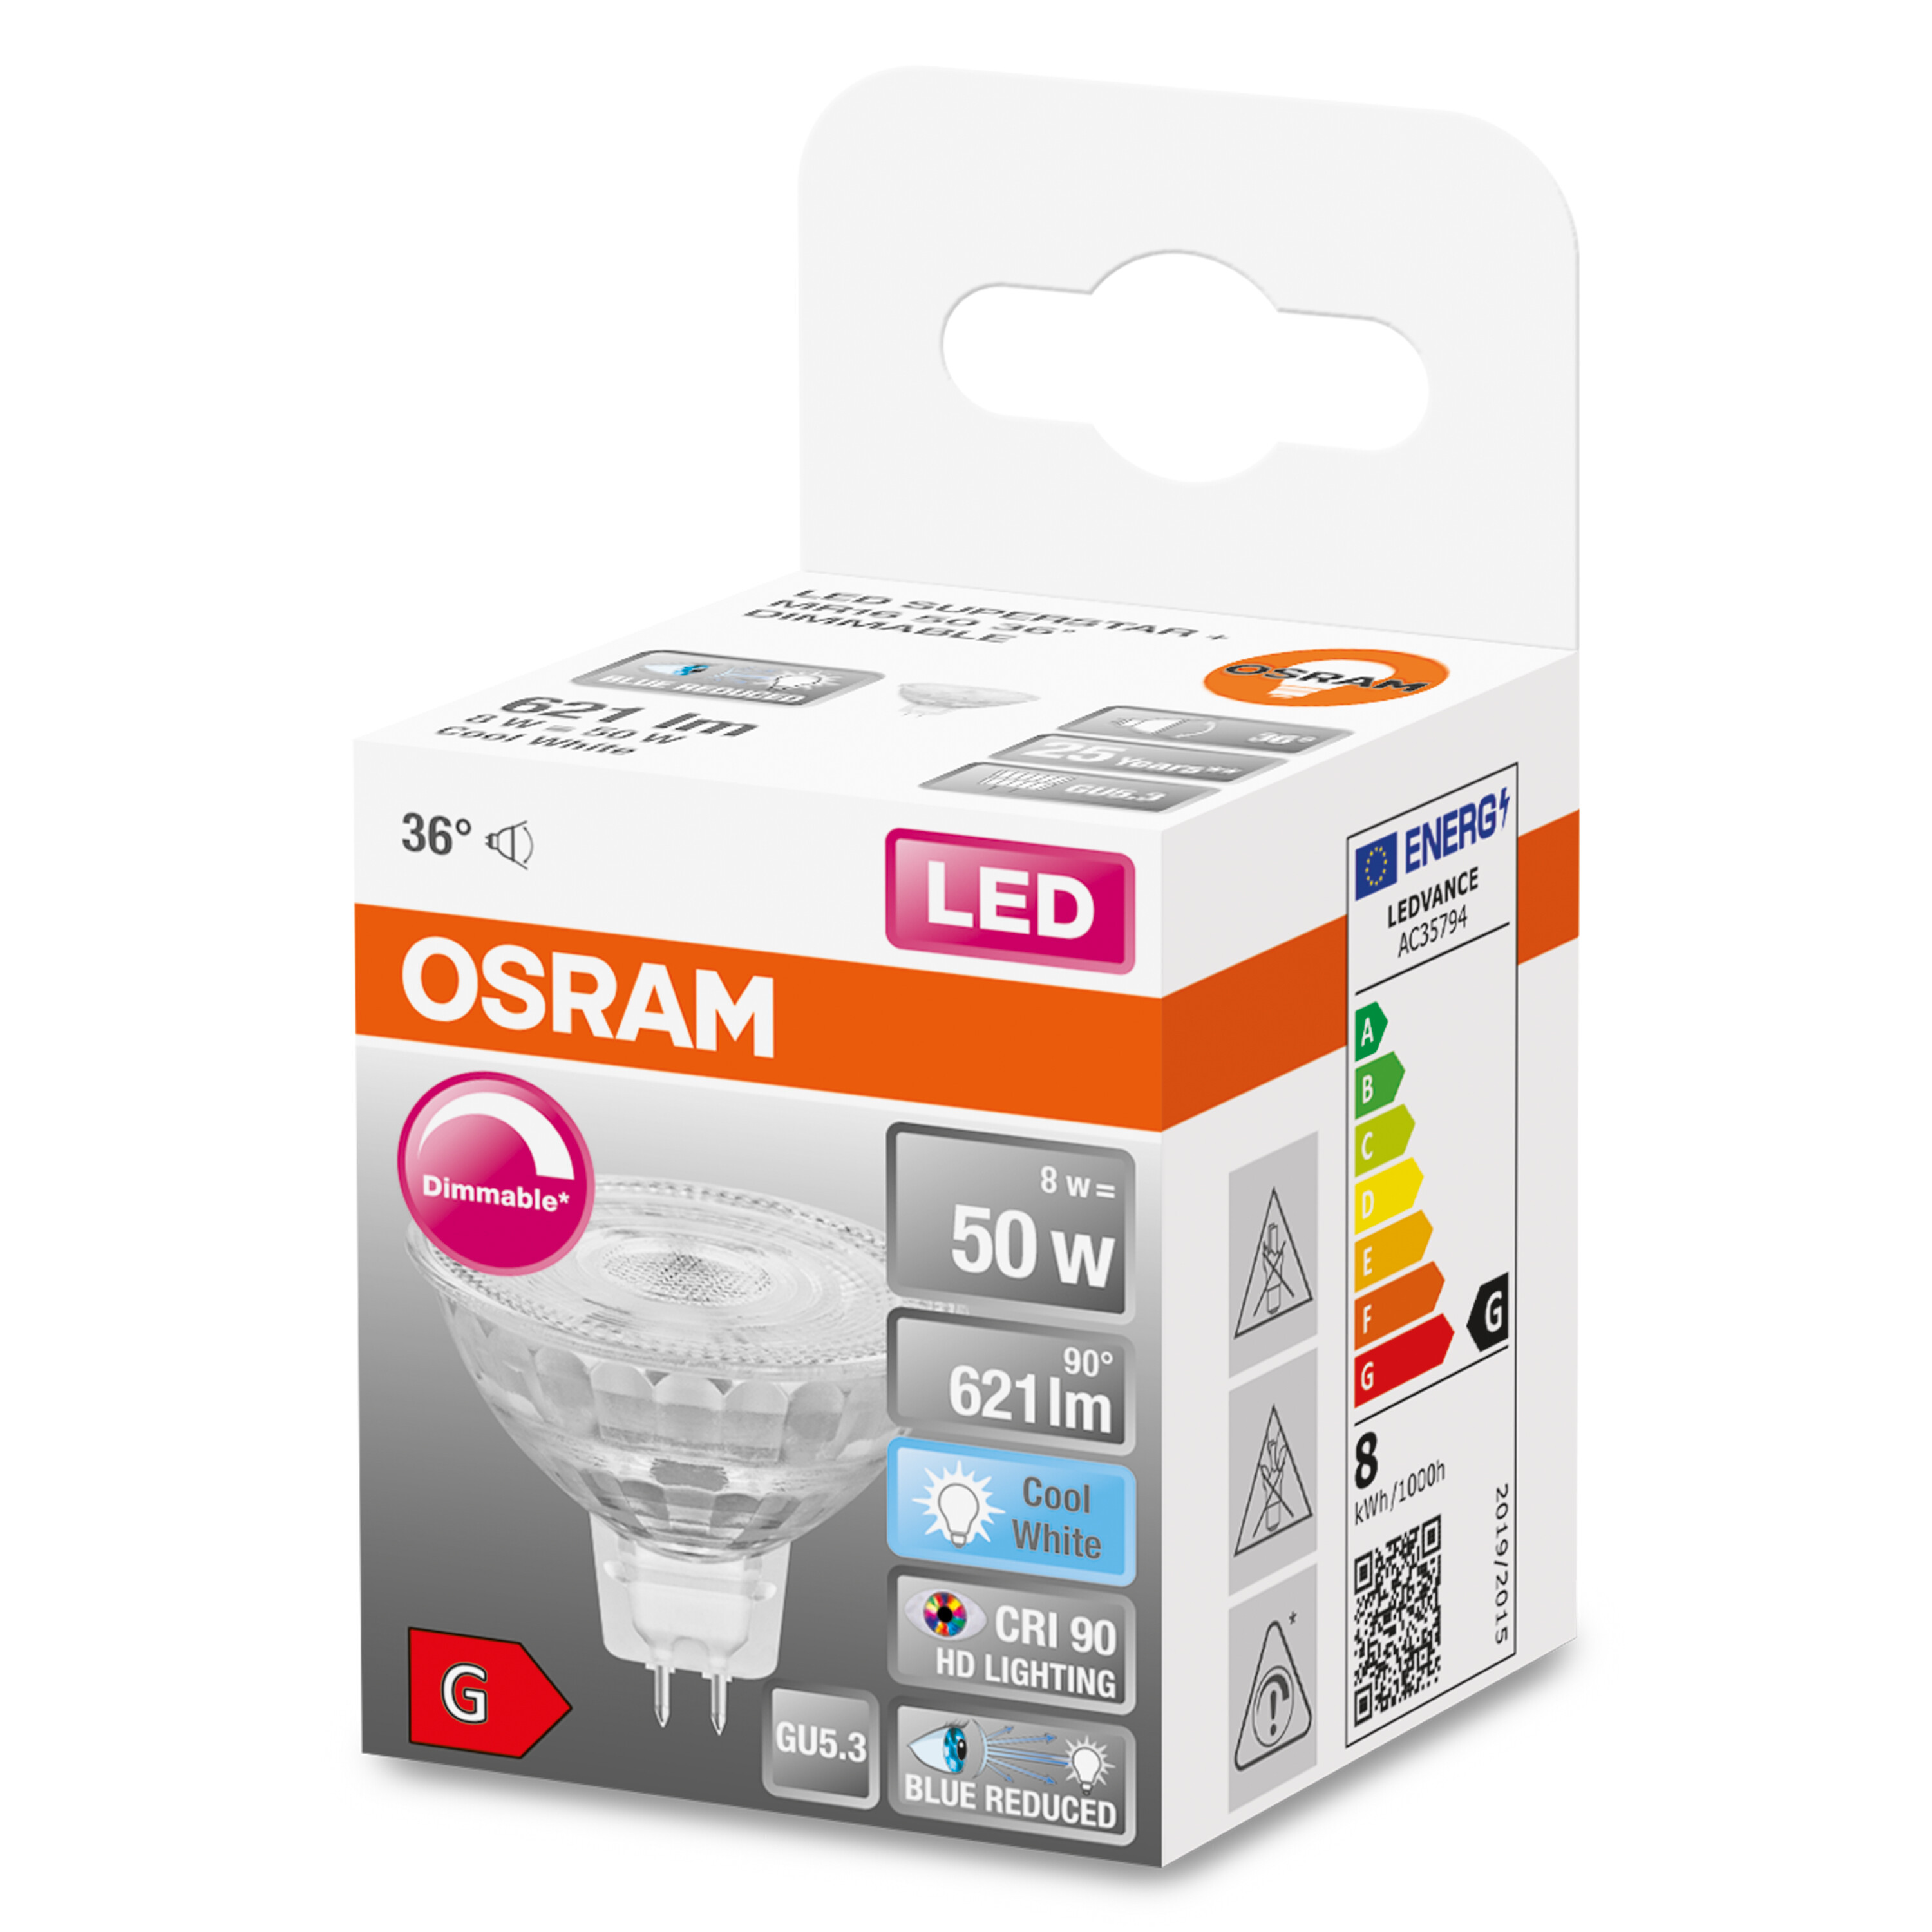 OSRAM  LED SUPERSTAR PLUS Kaltweiß LED Reflektor-Lampe MR16 Lumen 621